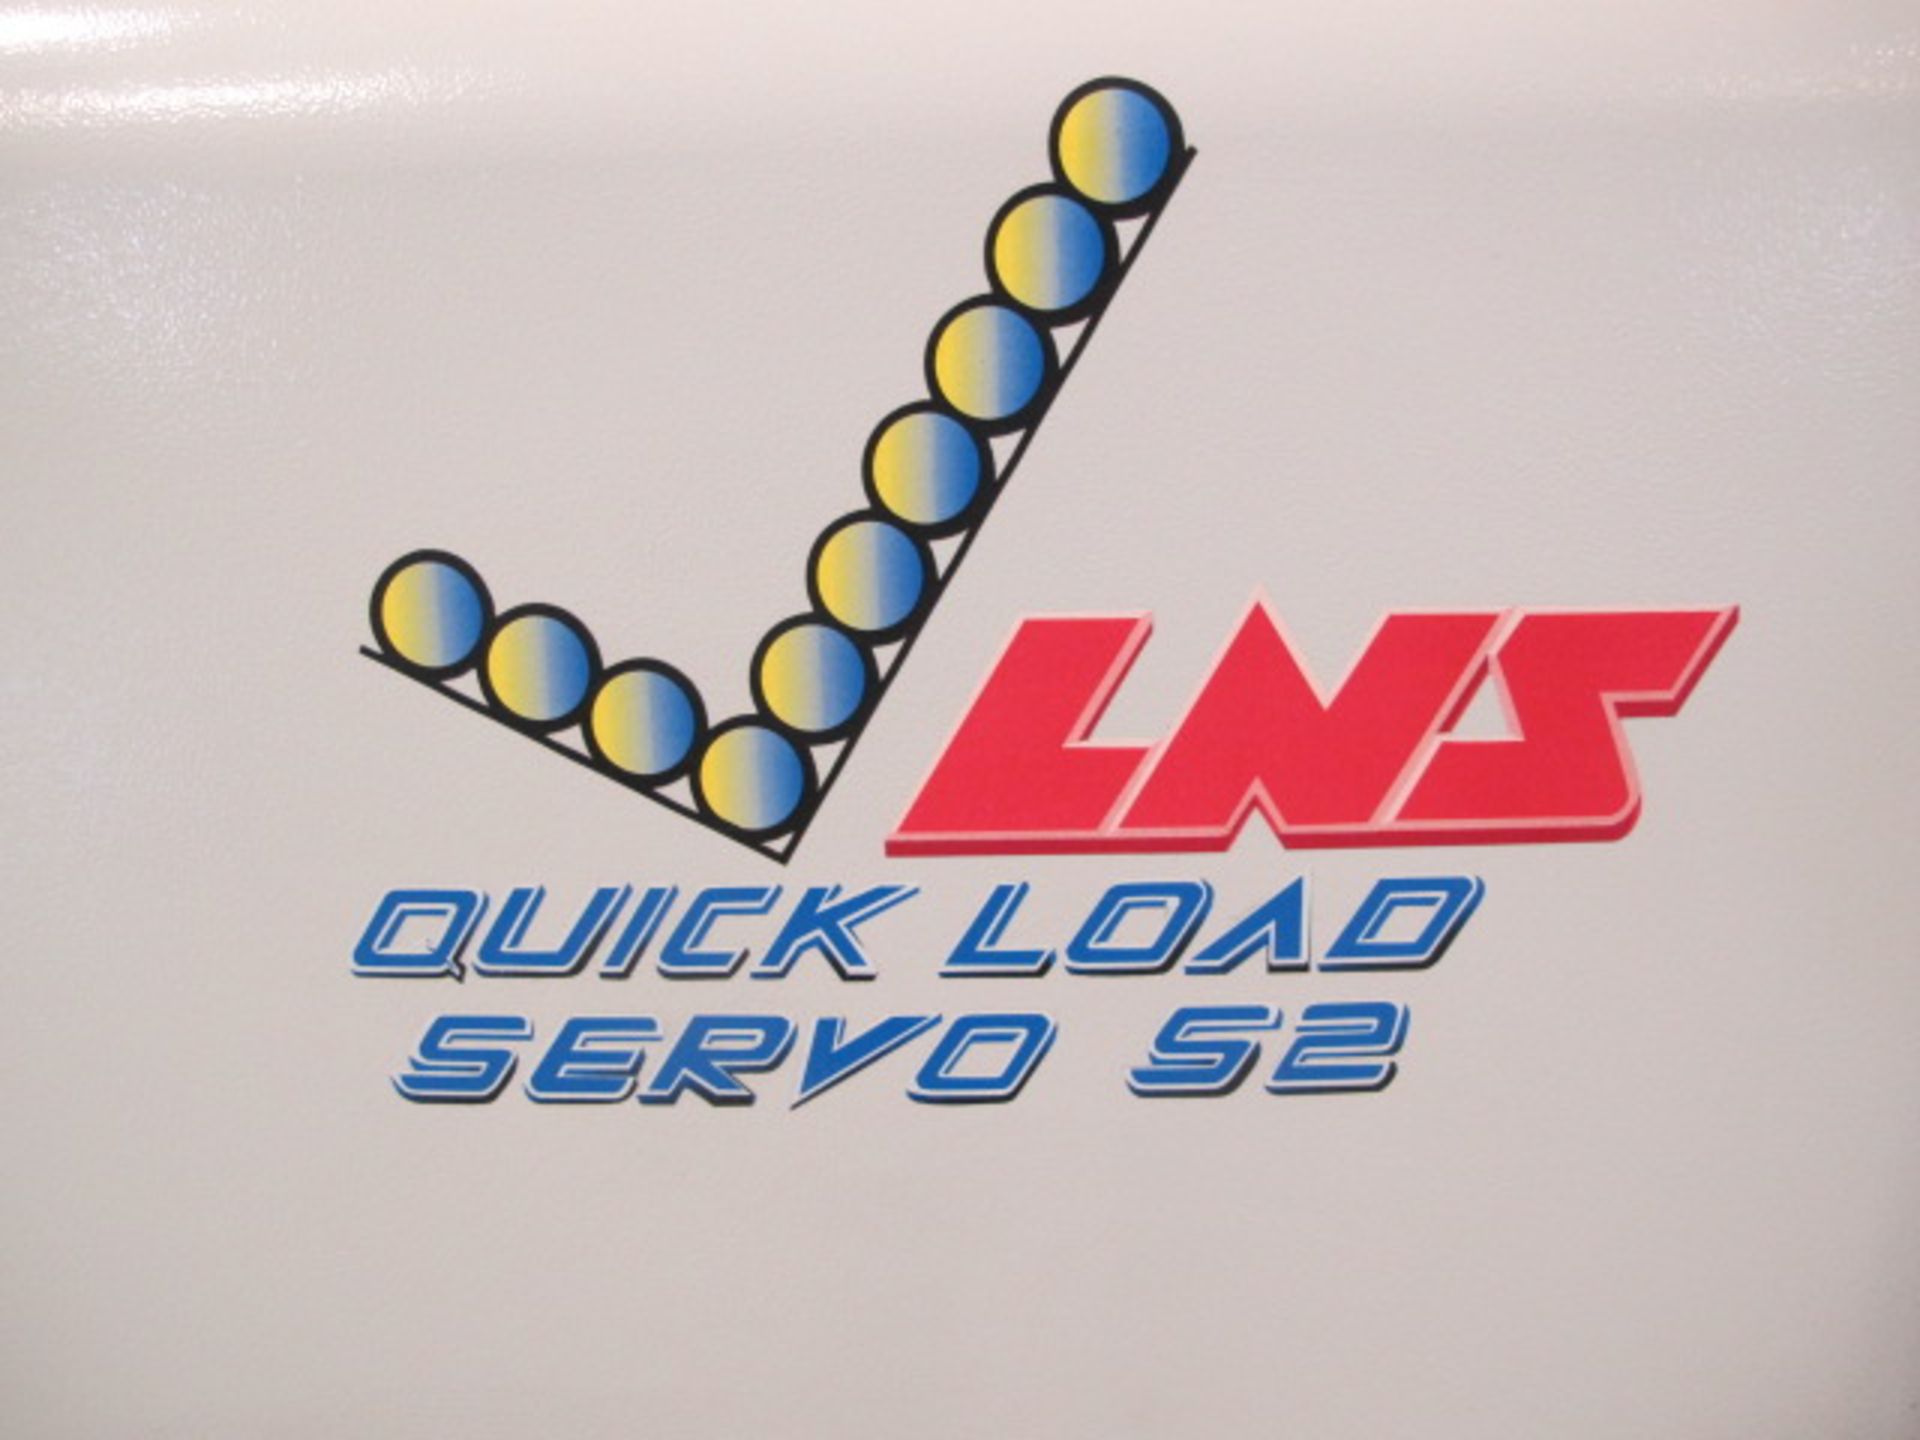 LNS Quick Load Servo S2 Automatic Bar Loader / Feeder s/n 301183 w/ LNS Digital Controls - Image 3 of 7